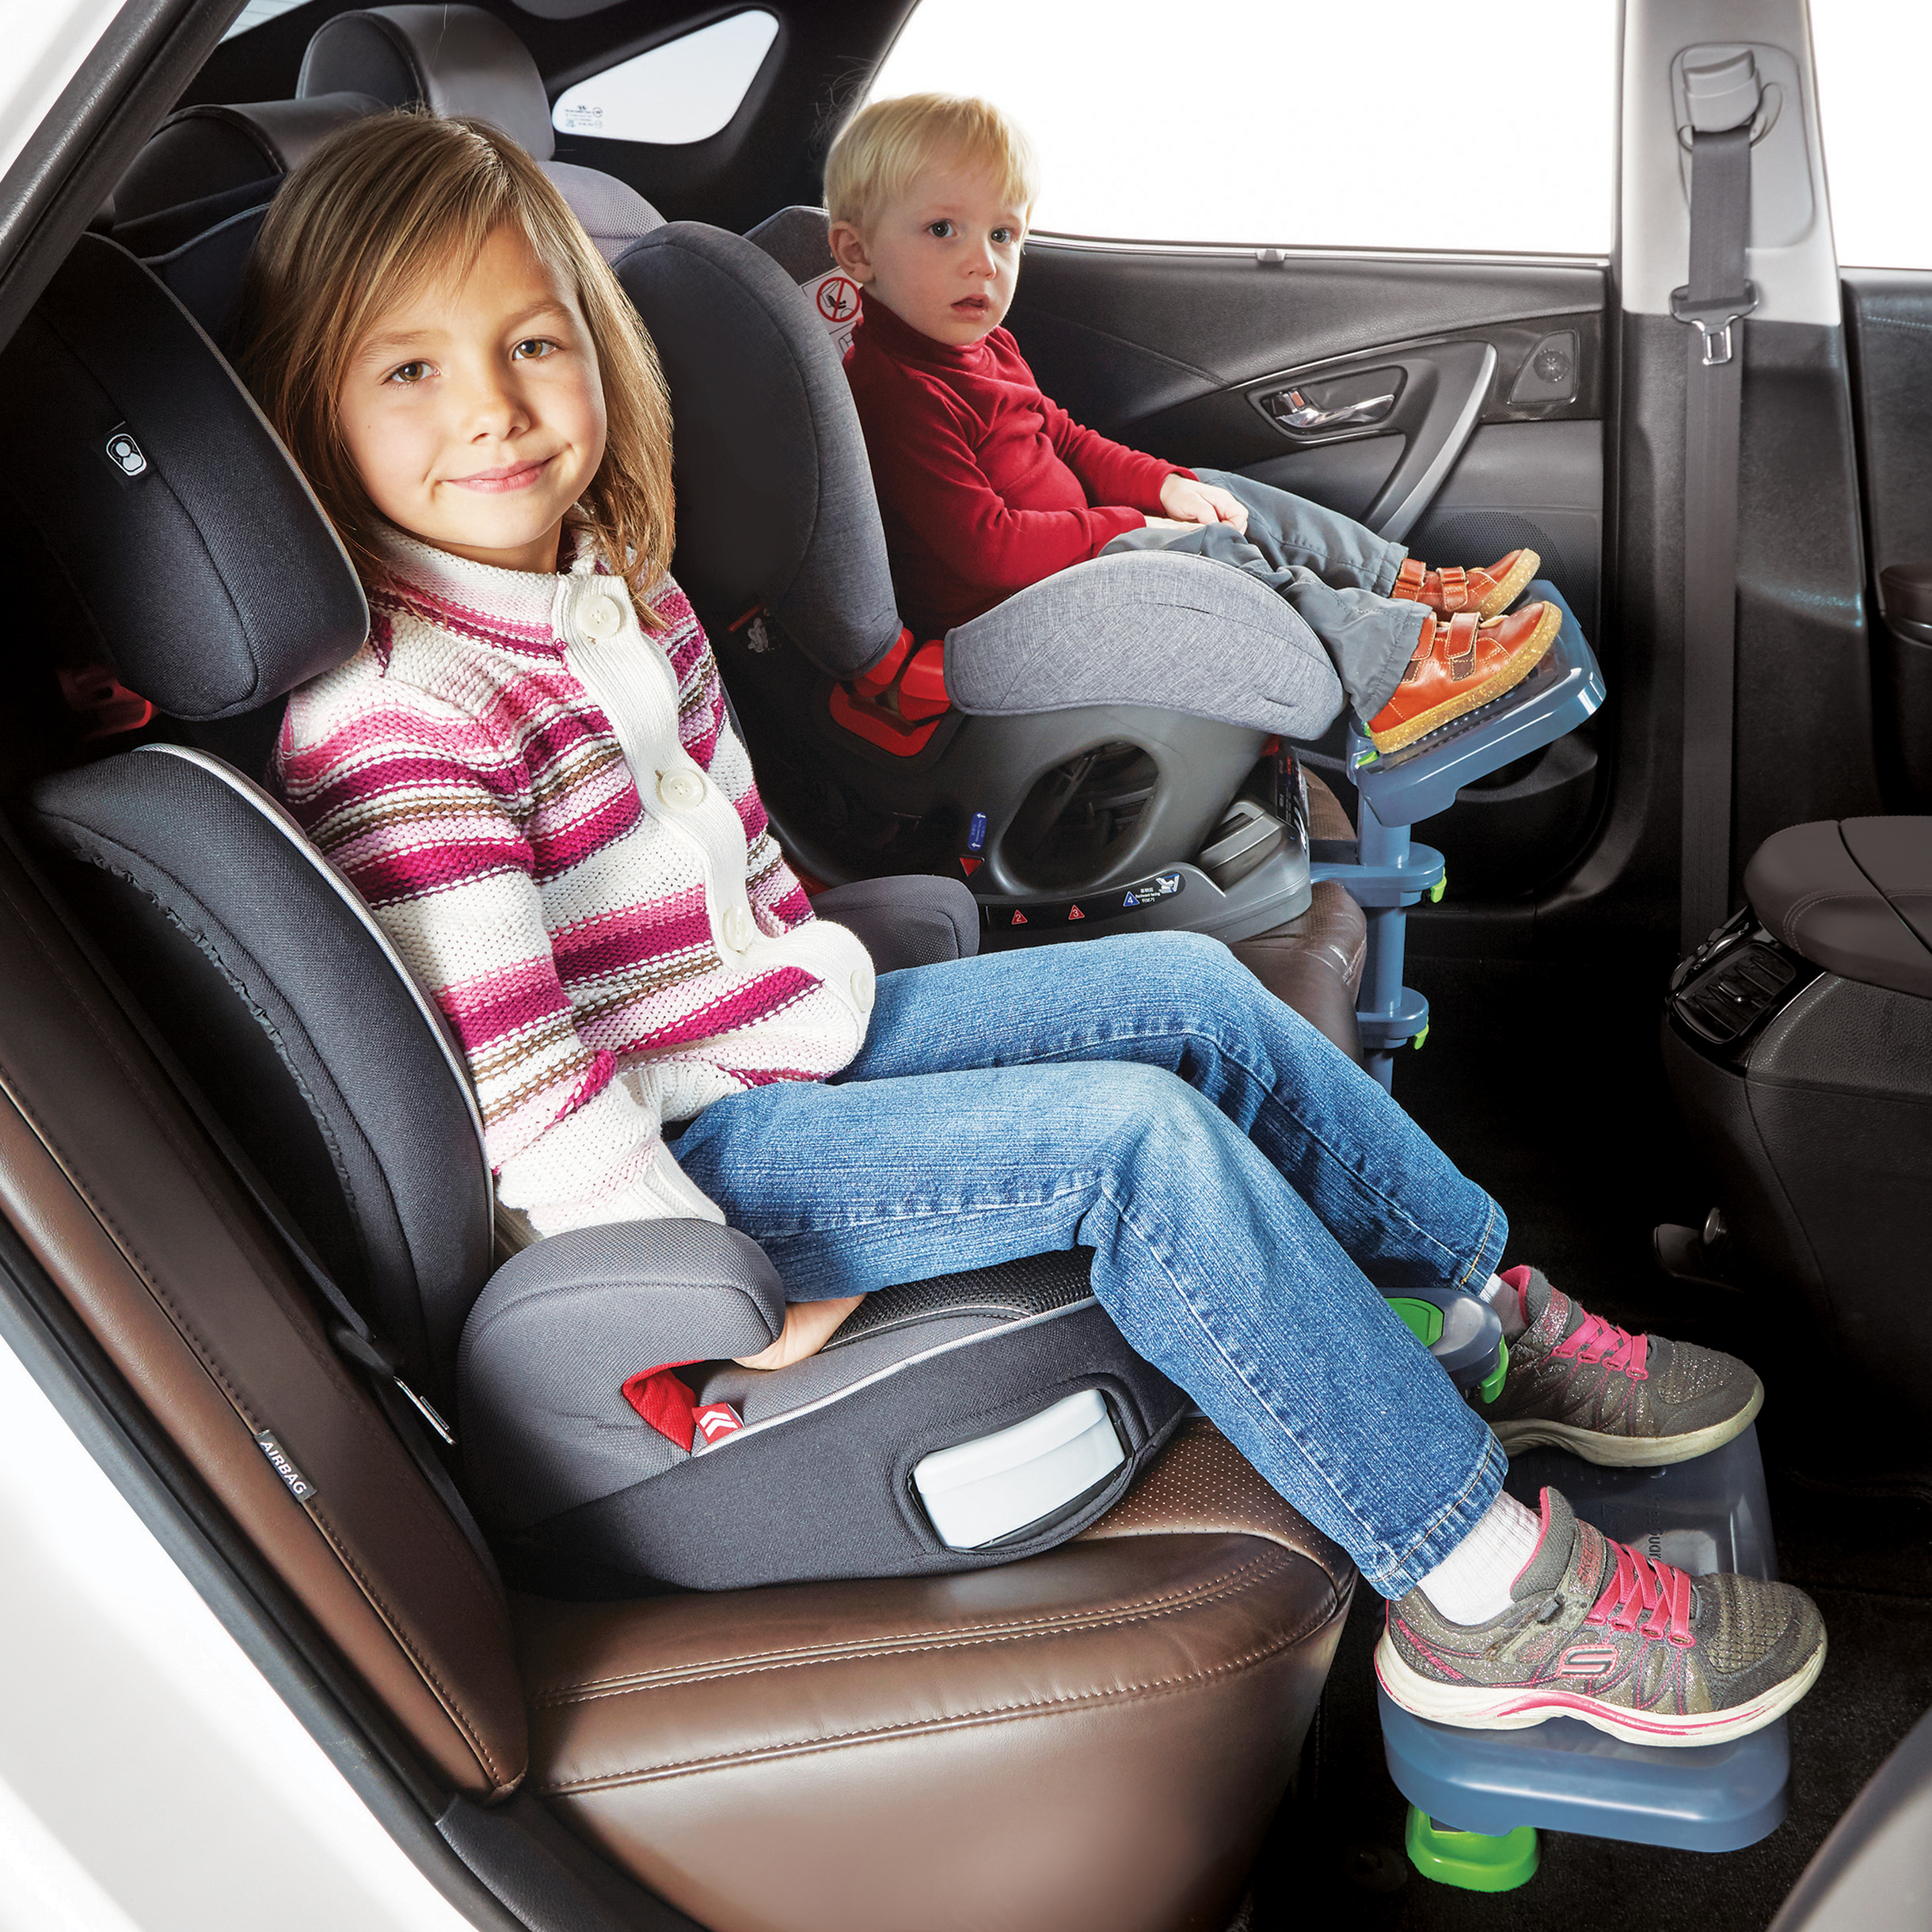 https://www.nappaawards.com/wp-content/uploads/2019/04/Car-Seat-Footrest-1.jpg